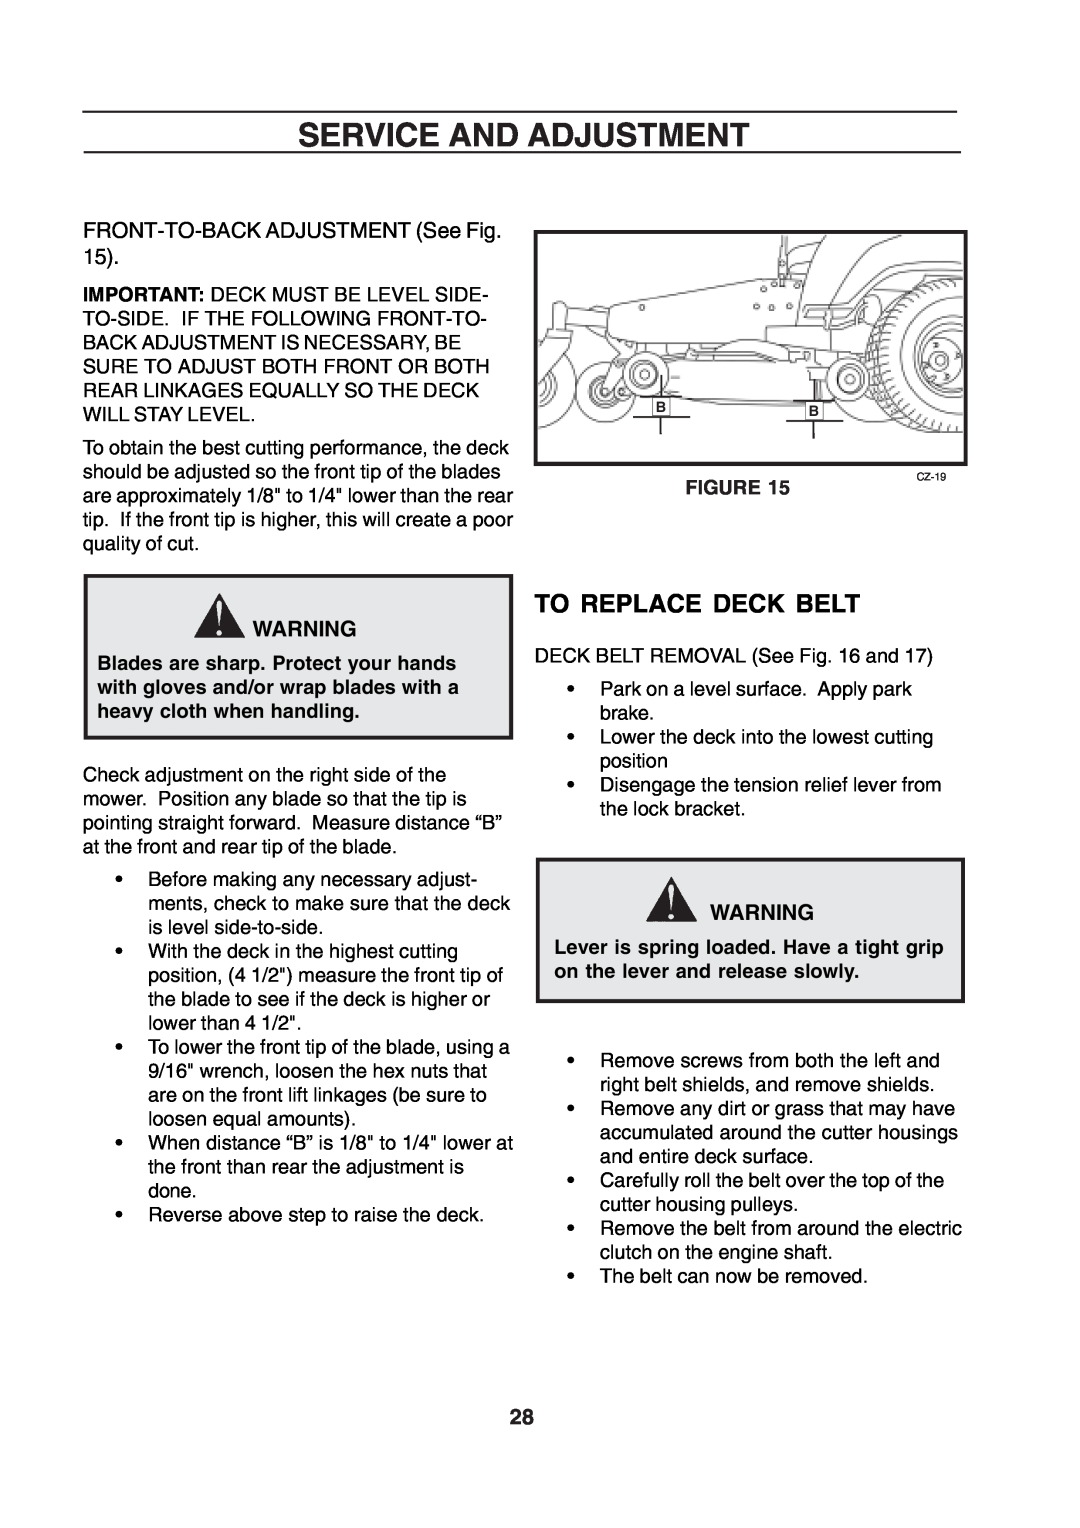 Husqvarna CZE 4818 manual To Replace Deck Belt, FRONT-TO-BACK ADJUSTMENT See Fig, Service And Adjustment 